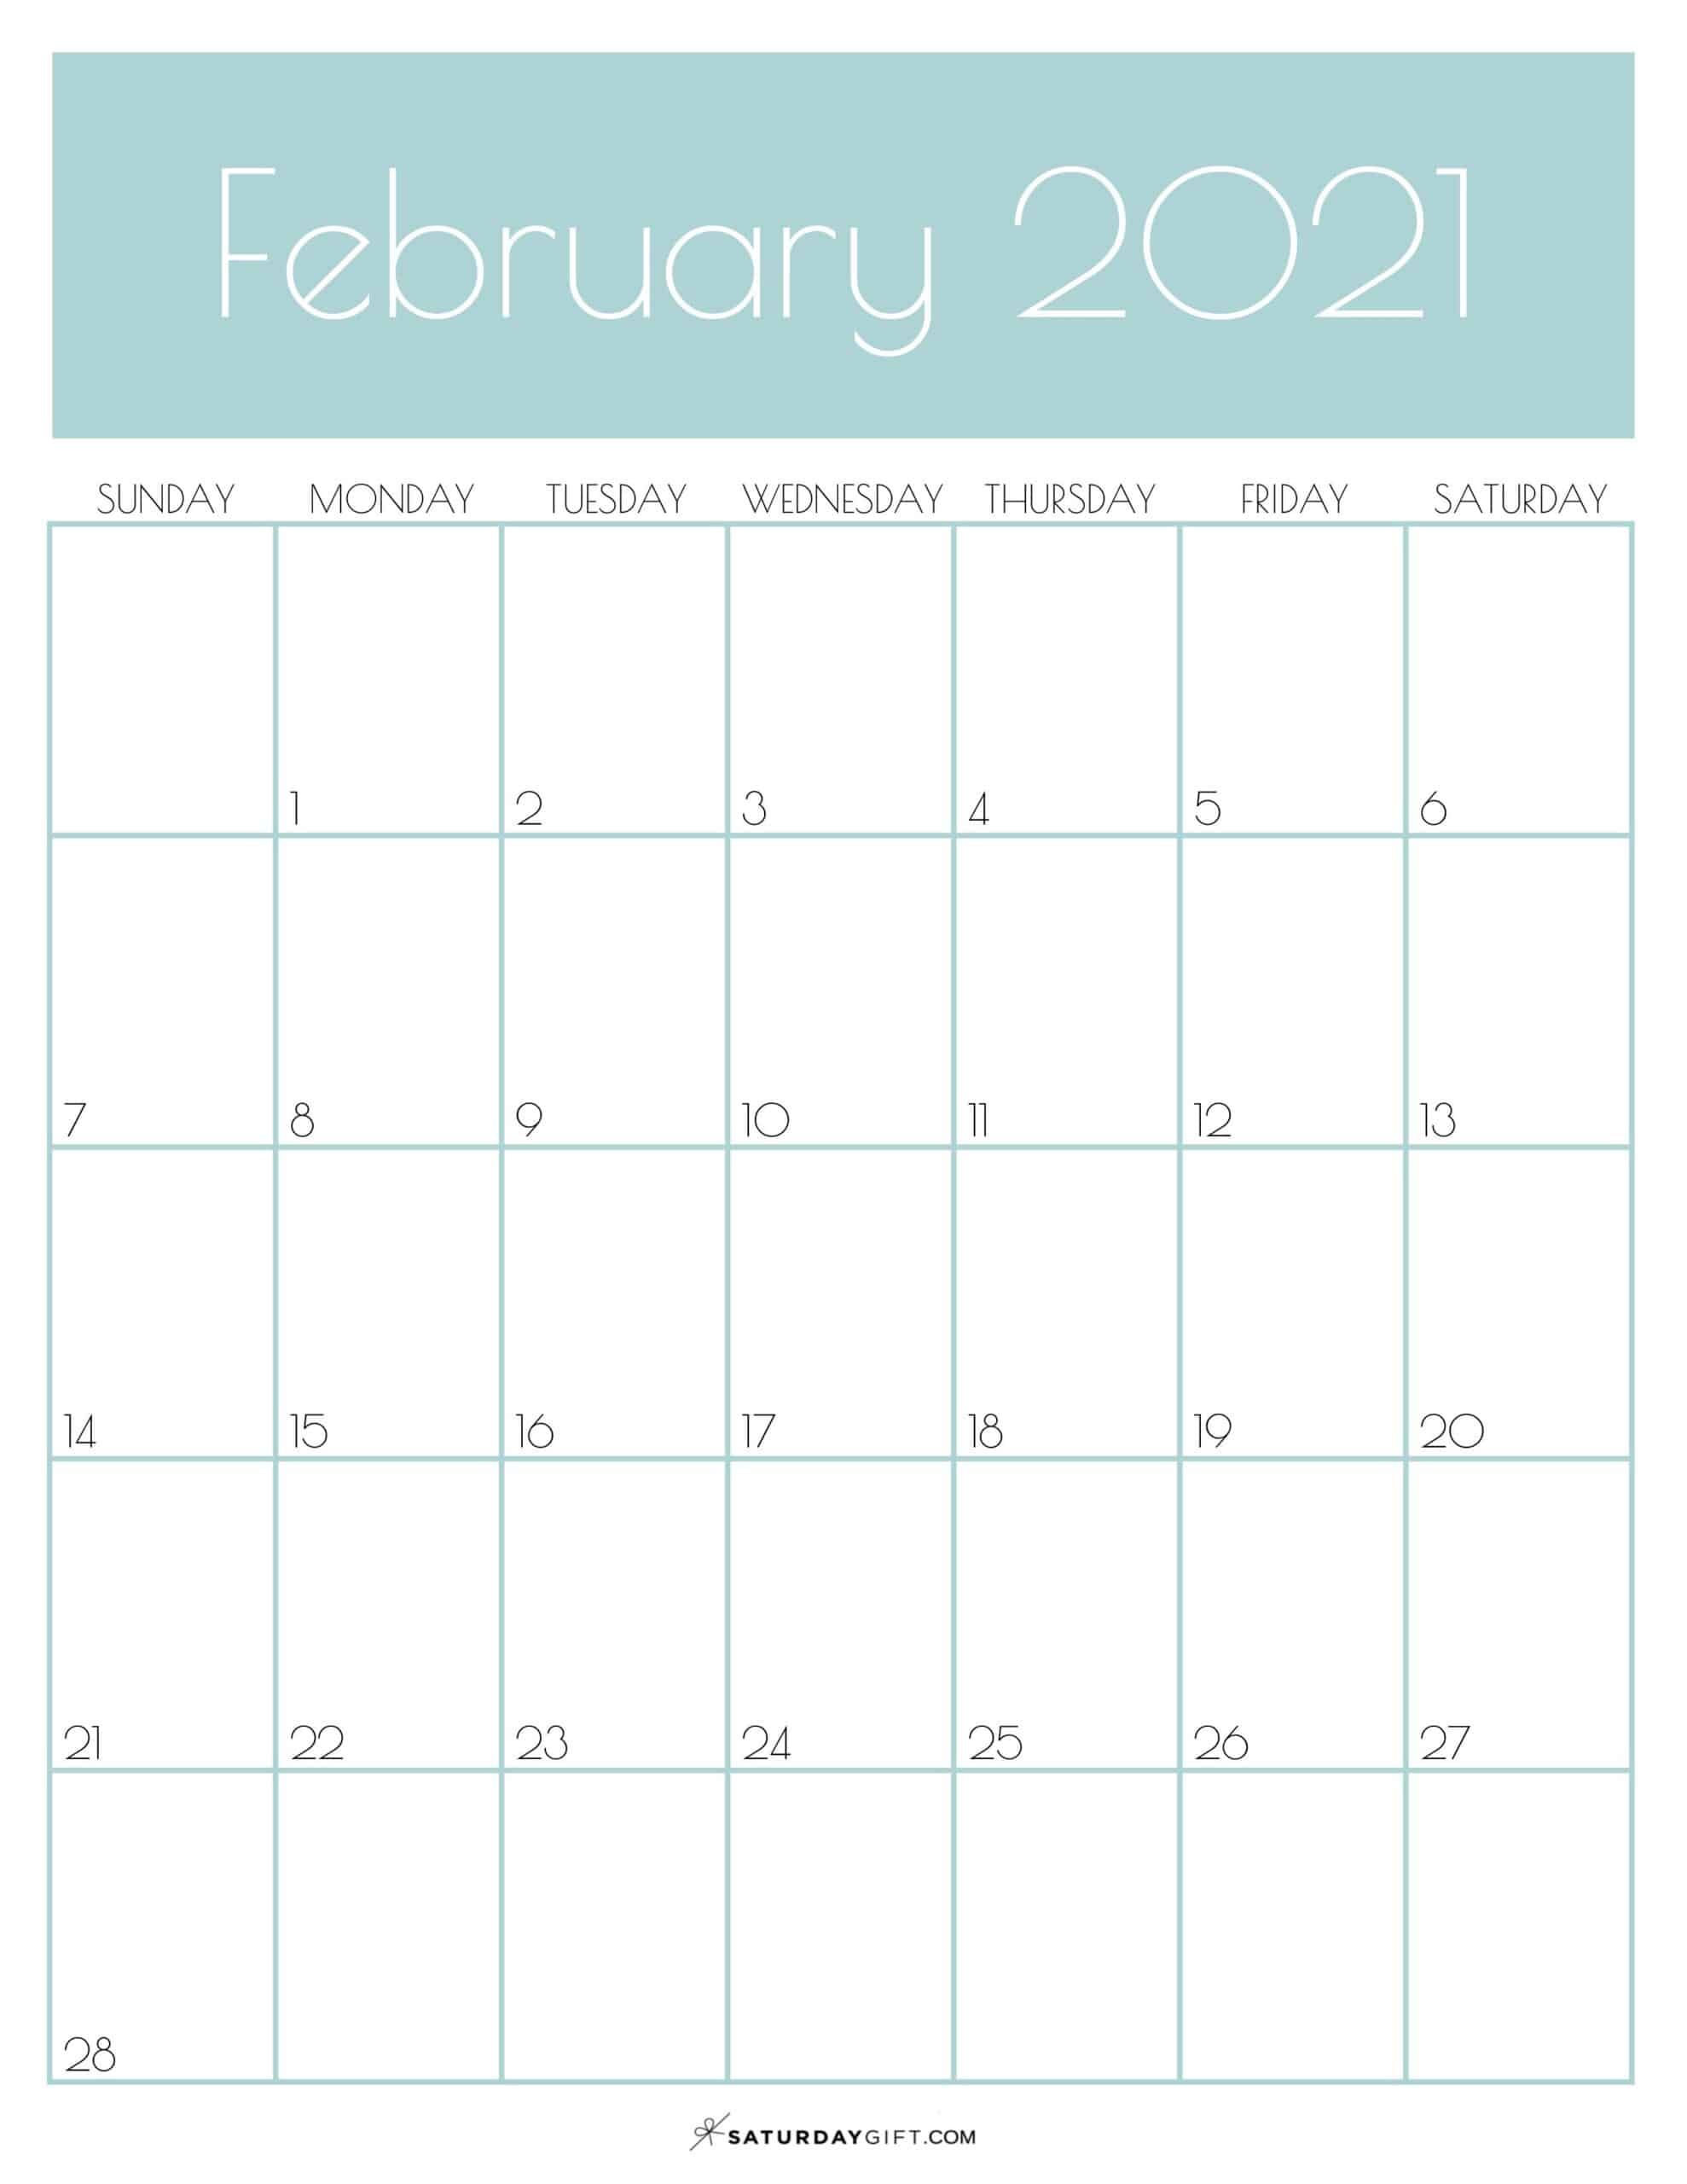 Cute (& Free!) Printable February 2021 Calendar. SaturdayGift in 2020 calendar, February calendar, Vertical calendar